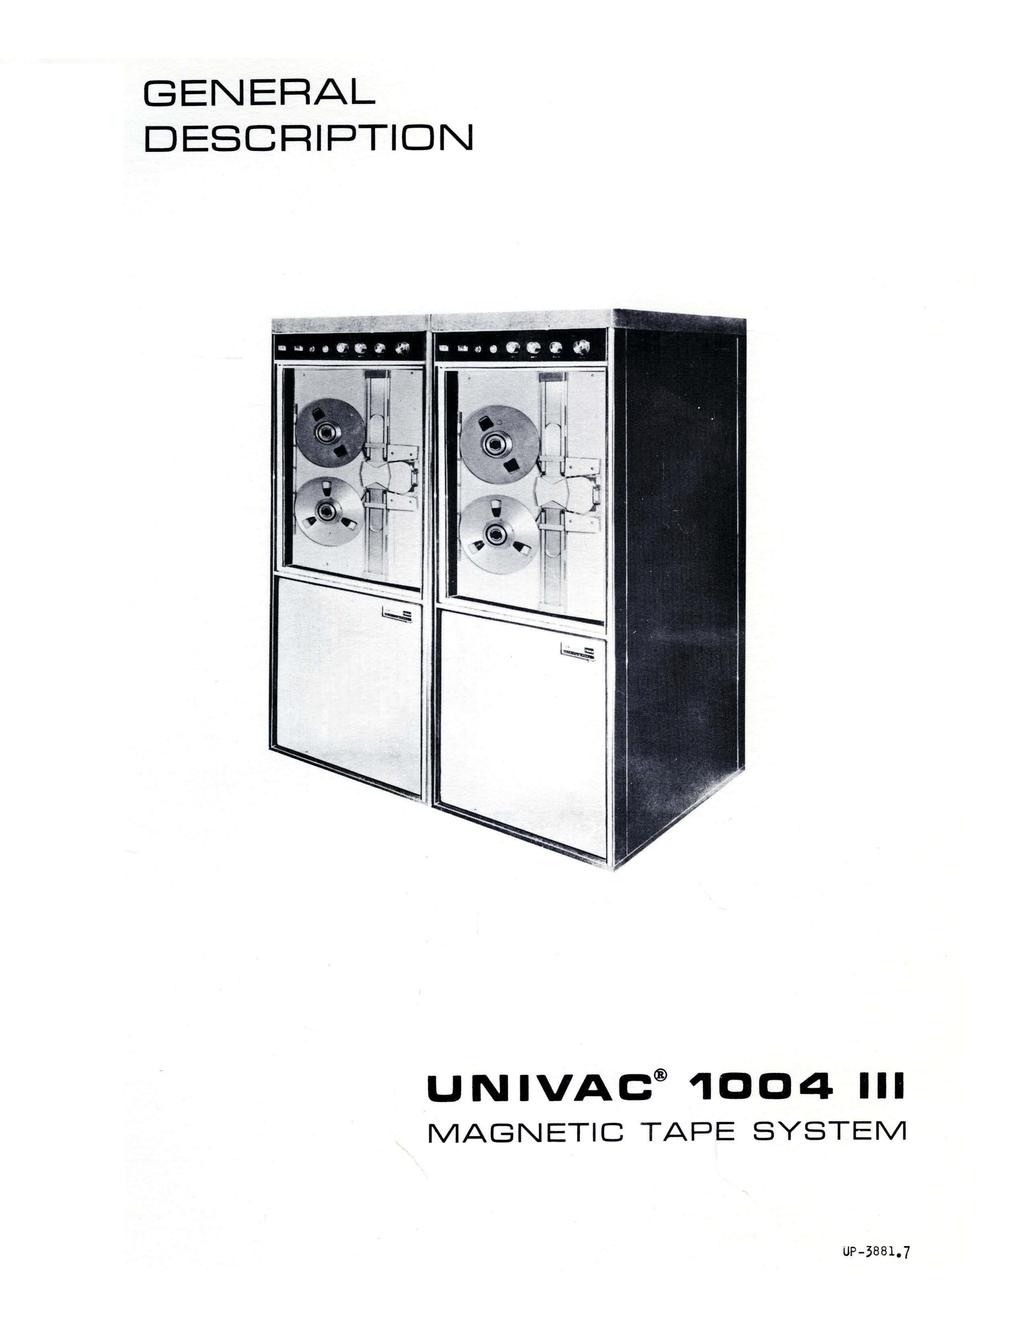 GENERAL DESCRIPTION UNIVAC